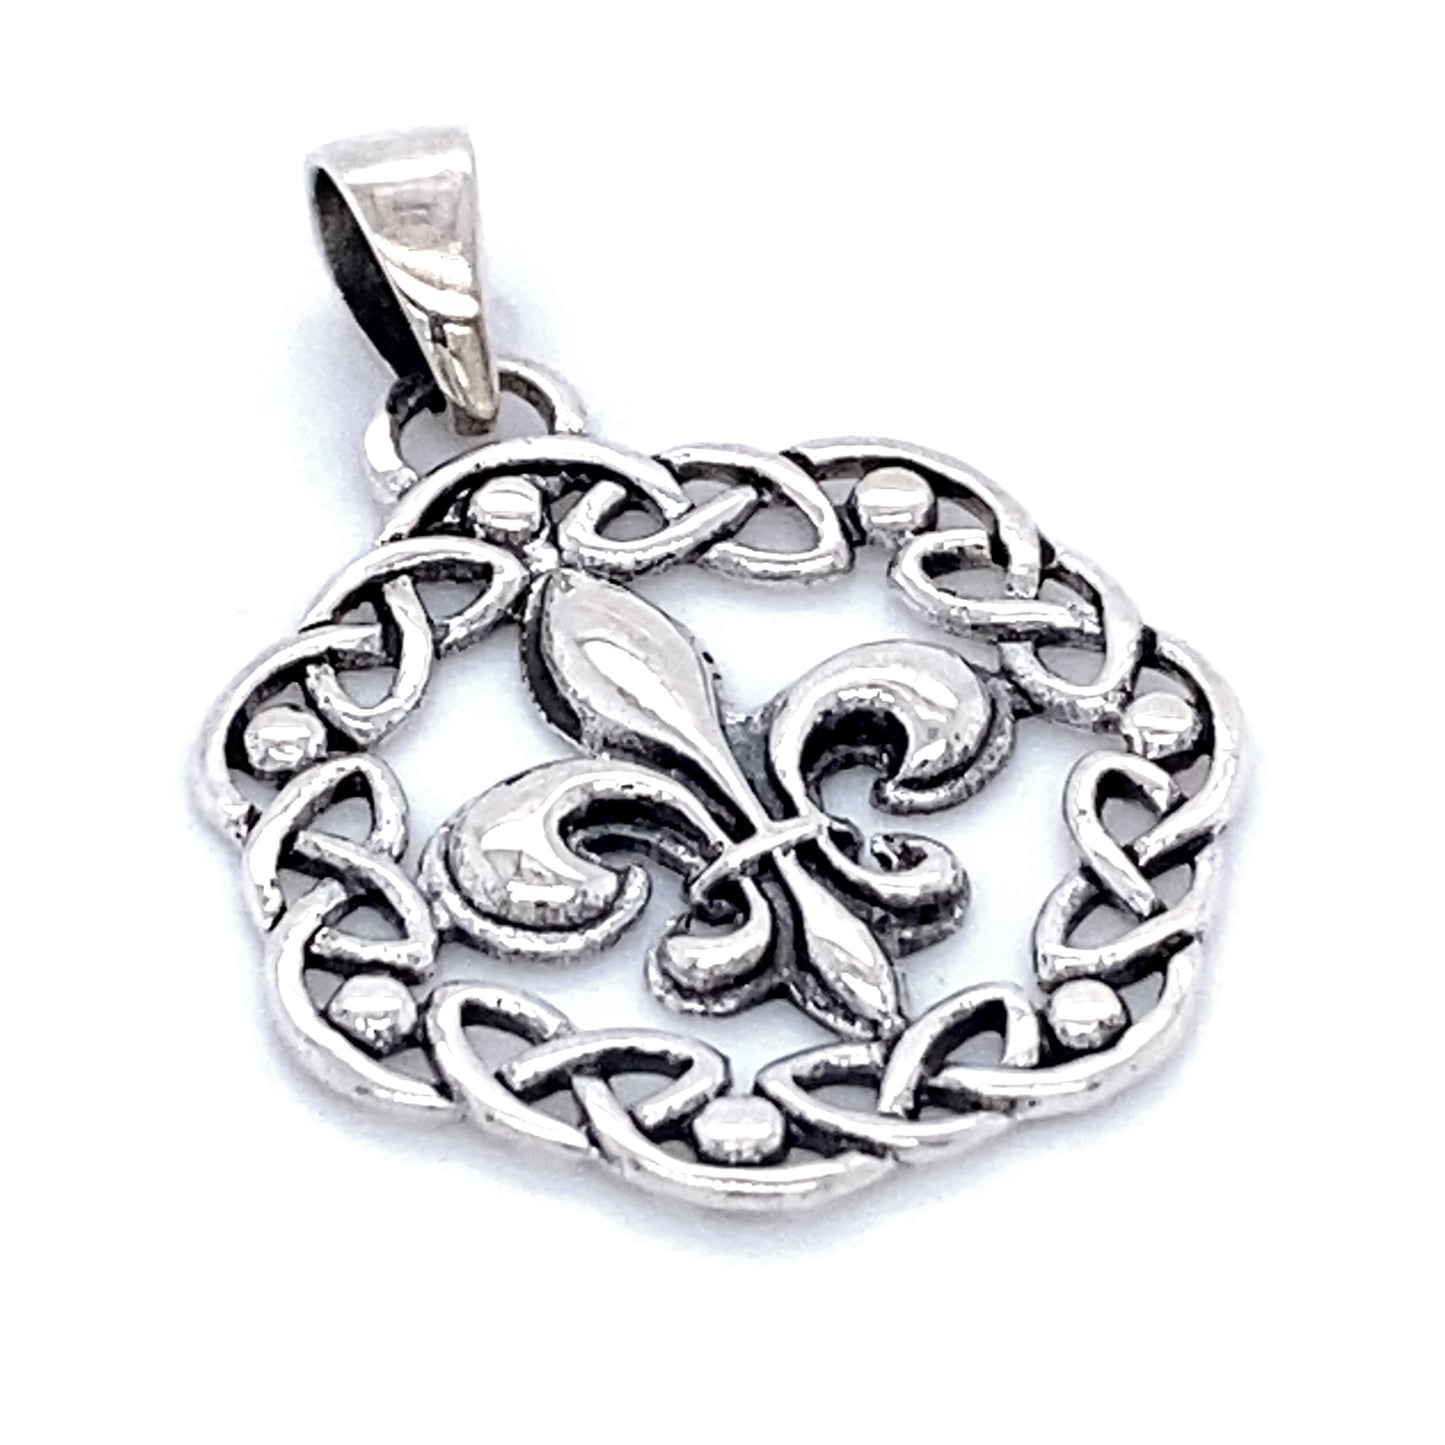 A Fleur De Lis Charm With Celtic Weave featuring a striking fleur-de-lis symbol, elegantly encased in an intricate Celtic knot frame.